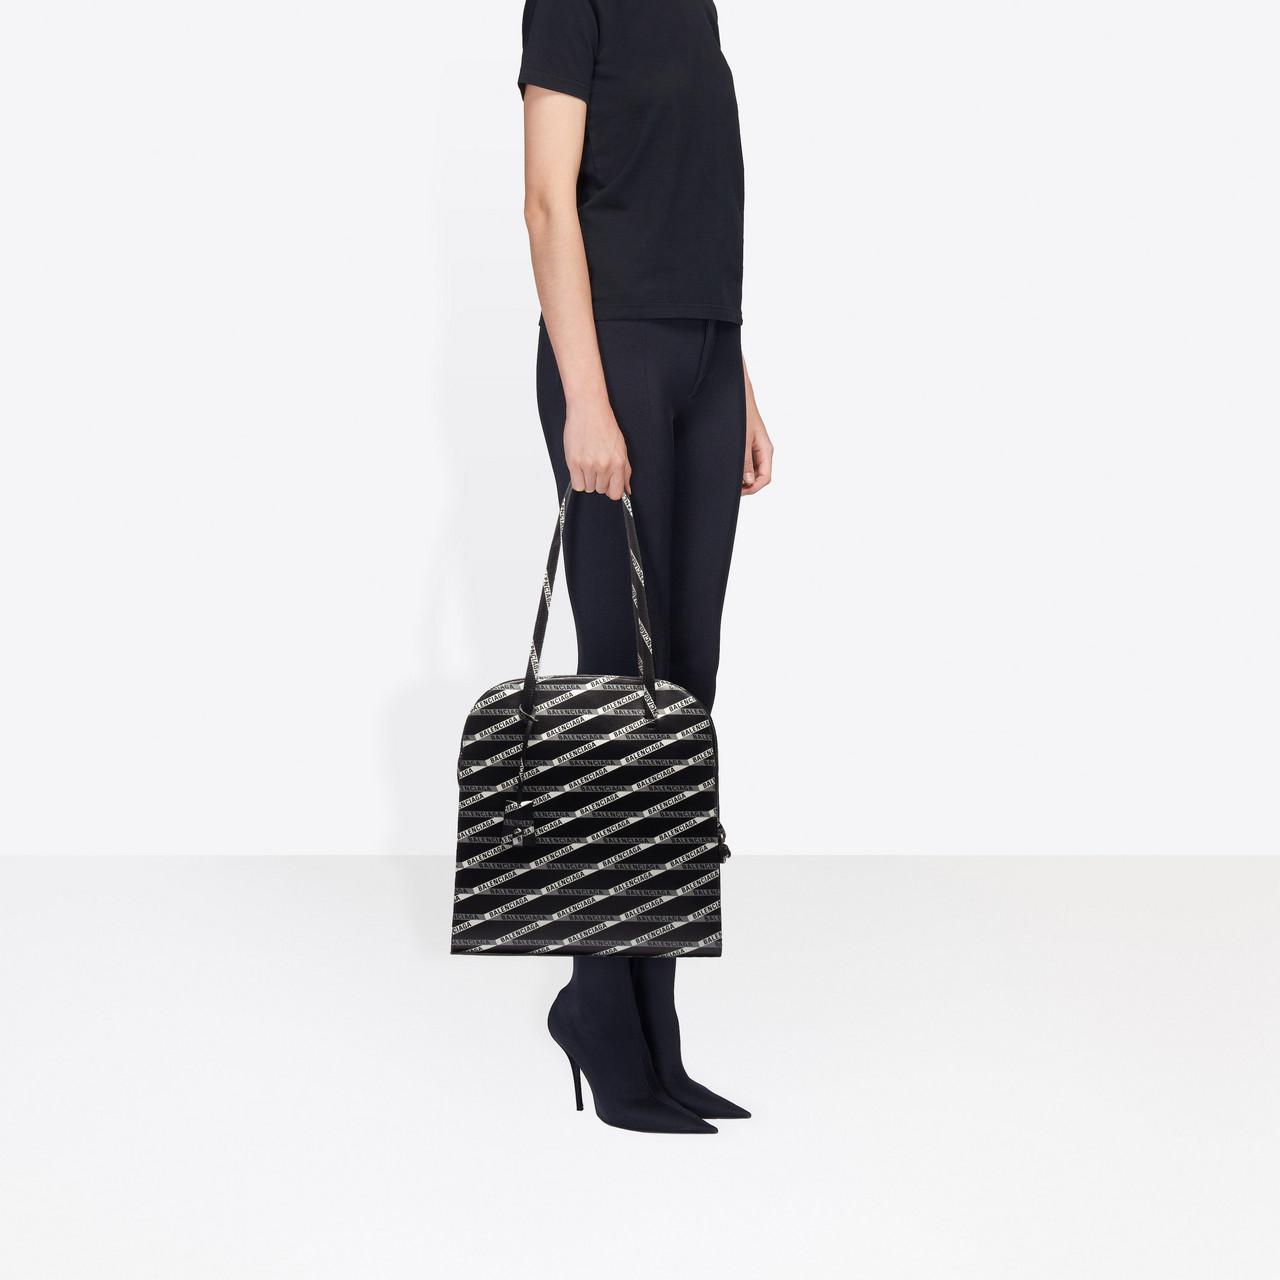 Balenciaga Leather Monogramme Miami Bag M in Black / Silver (Black) - Lyst